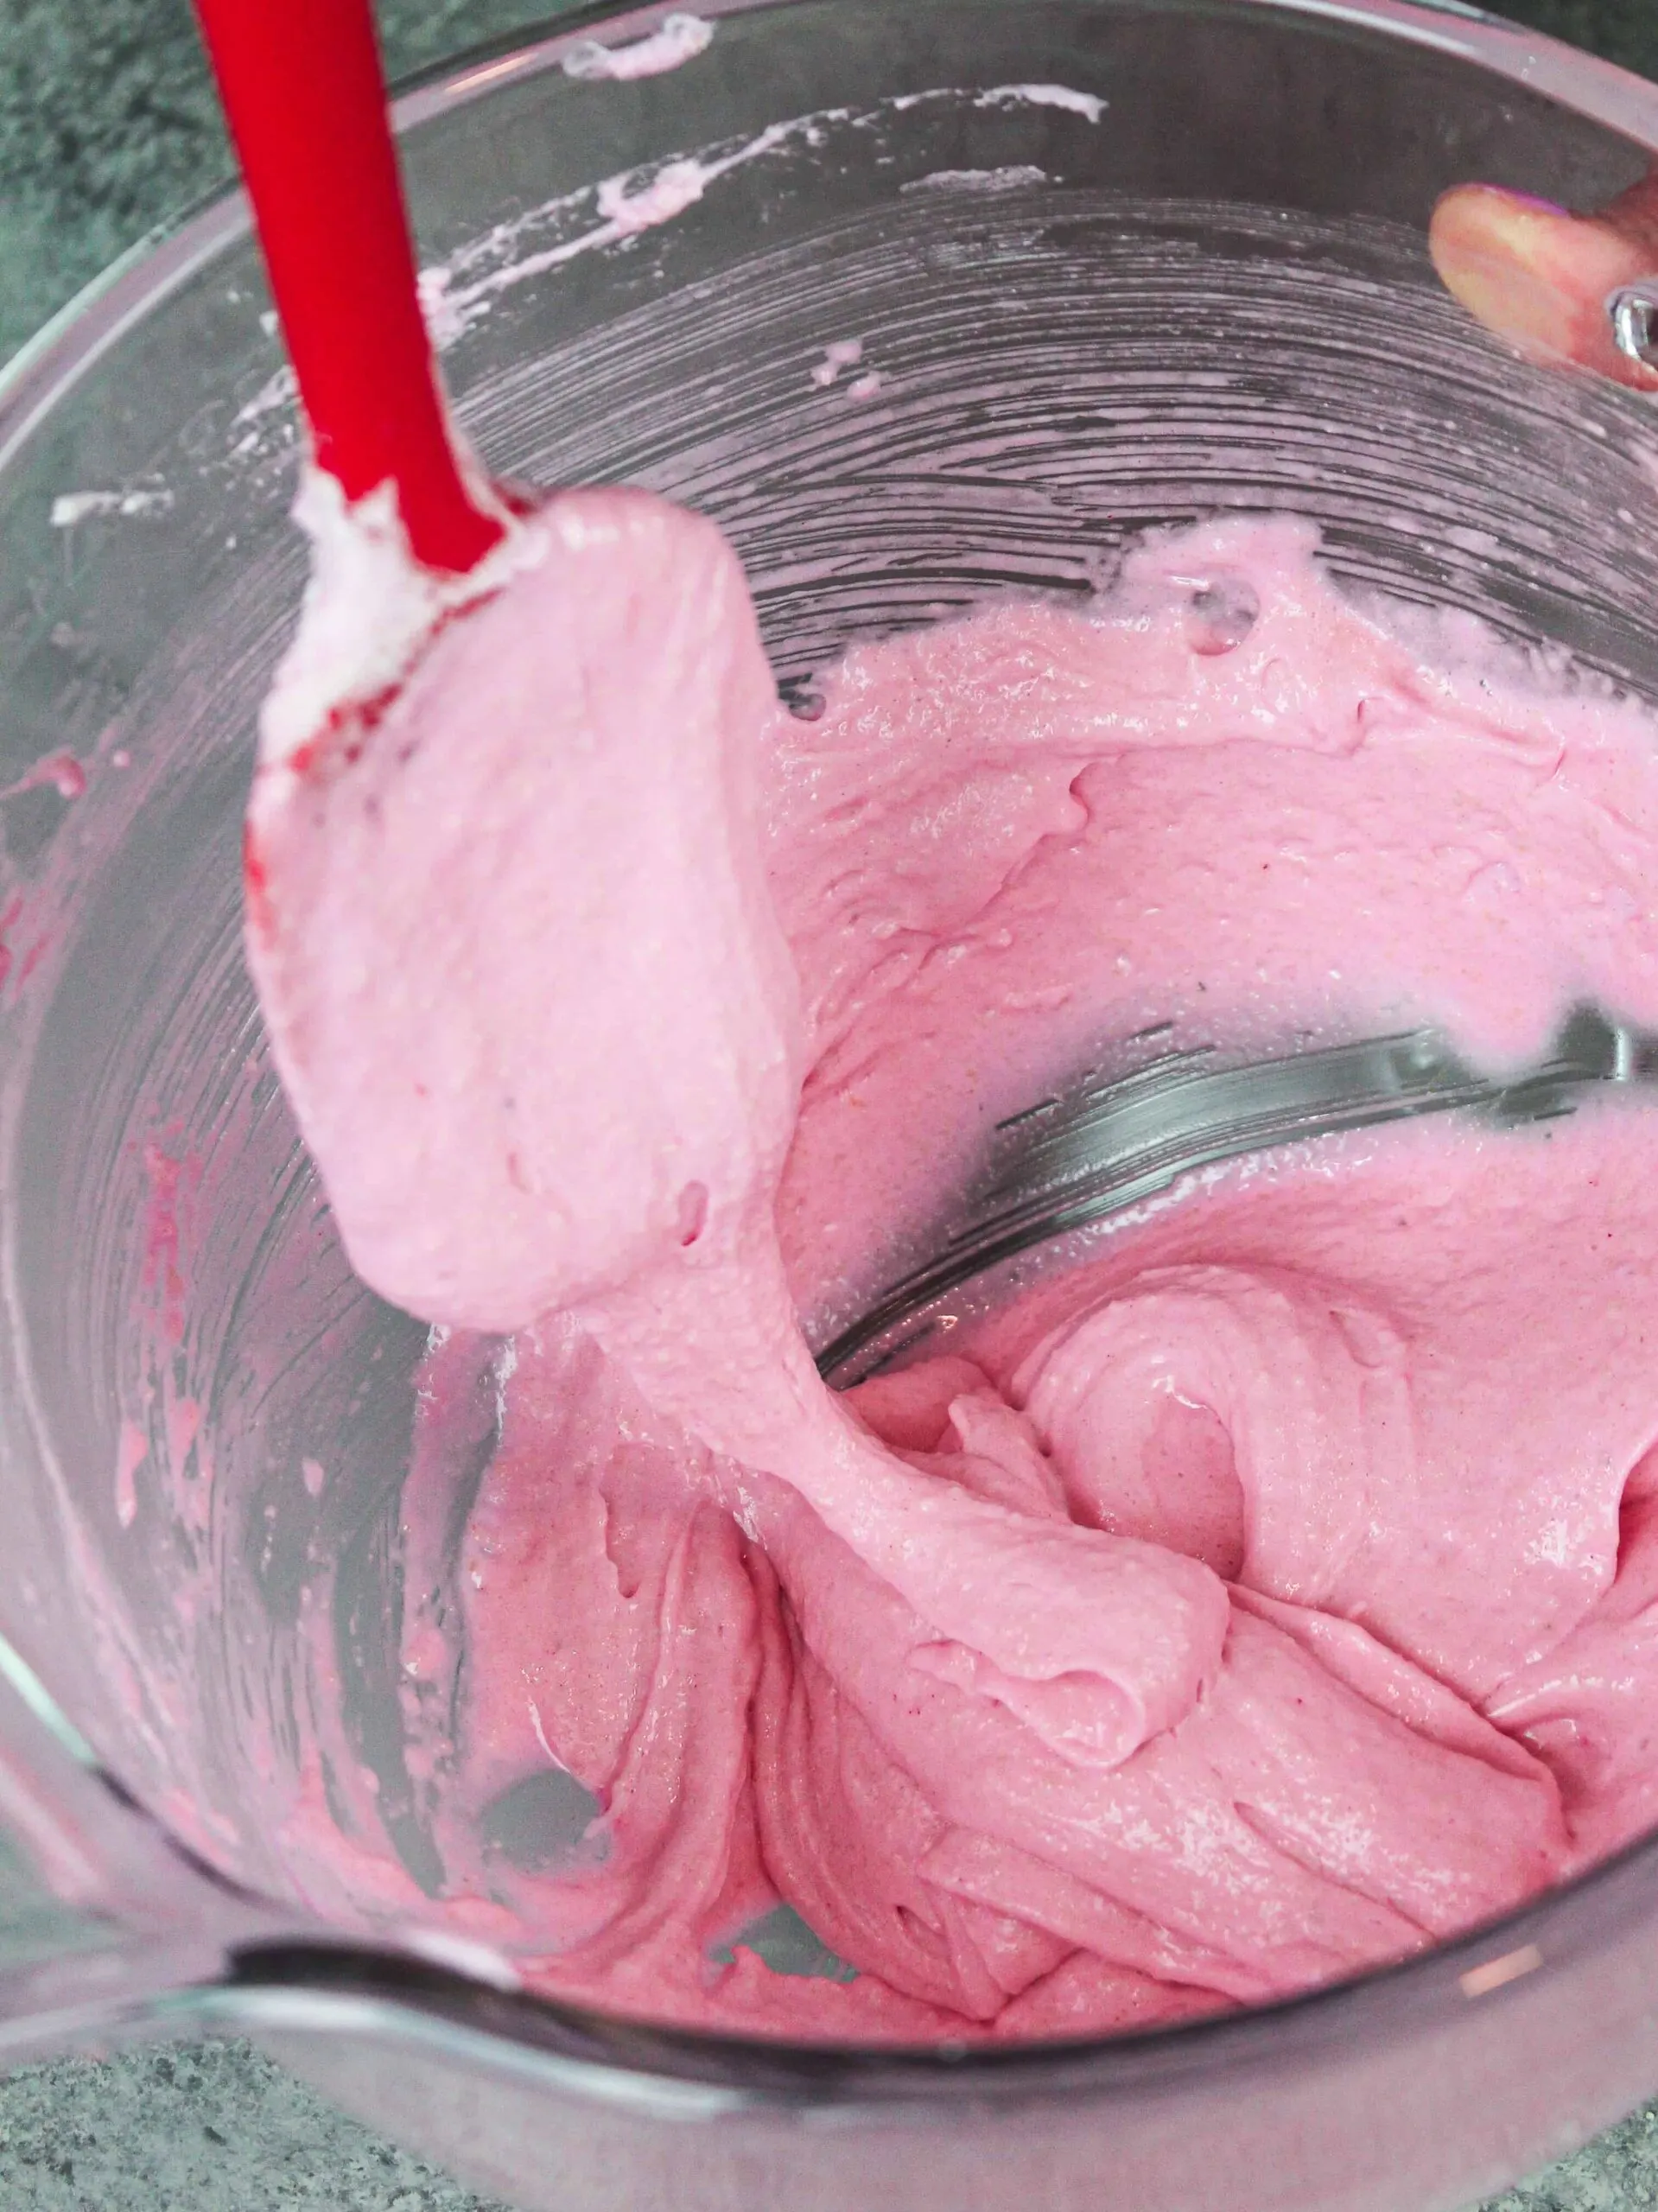 image of pink french macaron batter being mixed to make birthday cake
 macarons